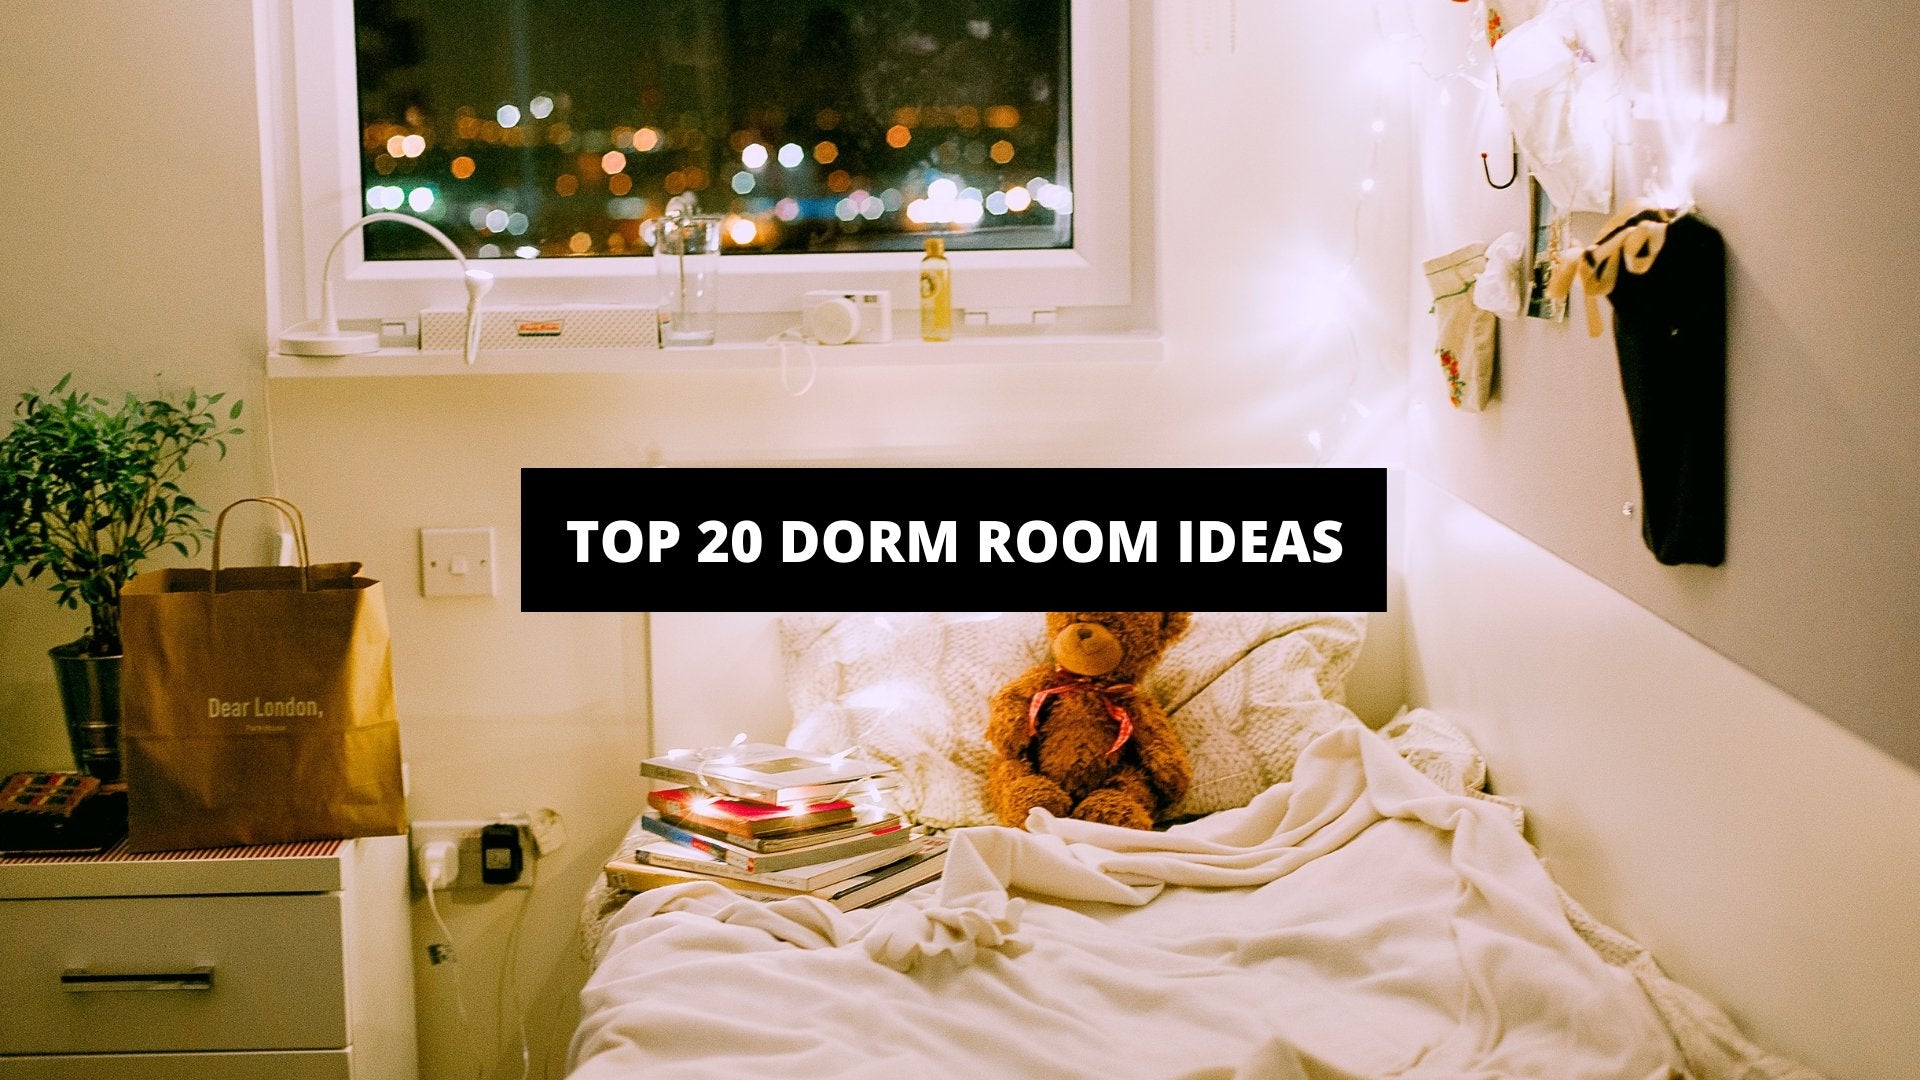 Top 20 Dorm Room Ideas - The Trendy Art